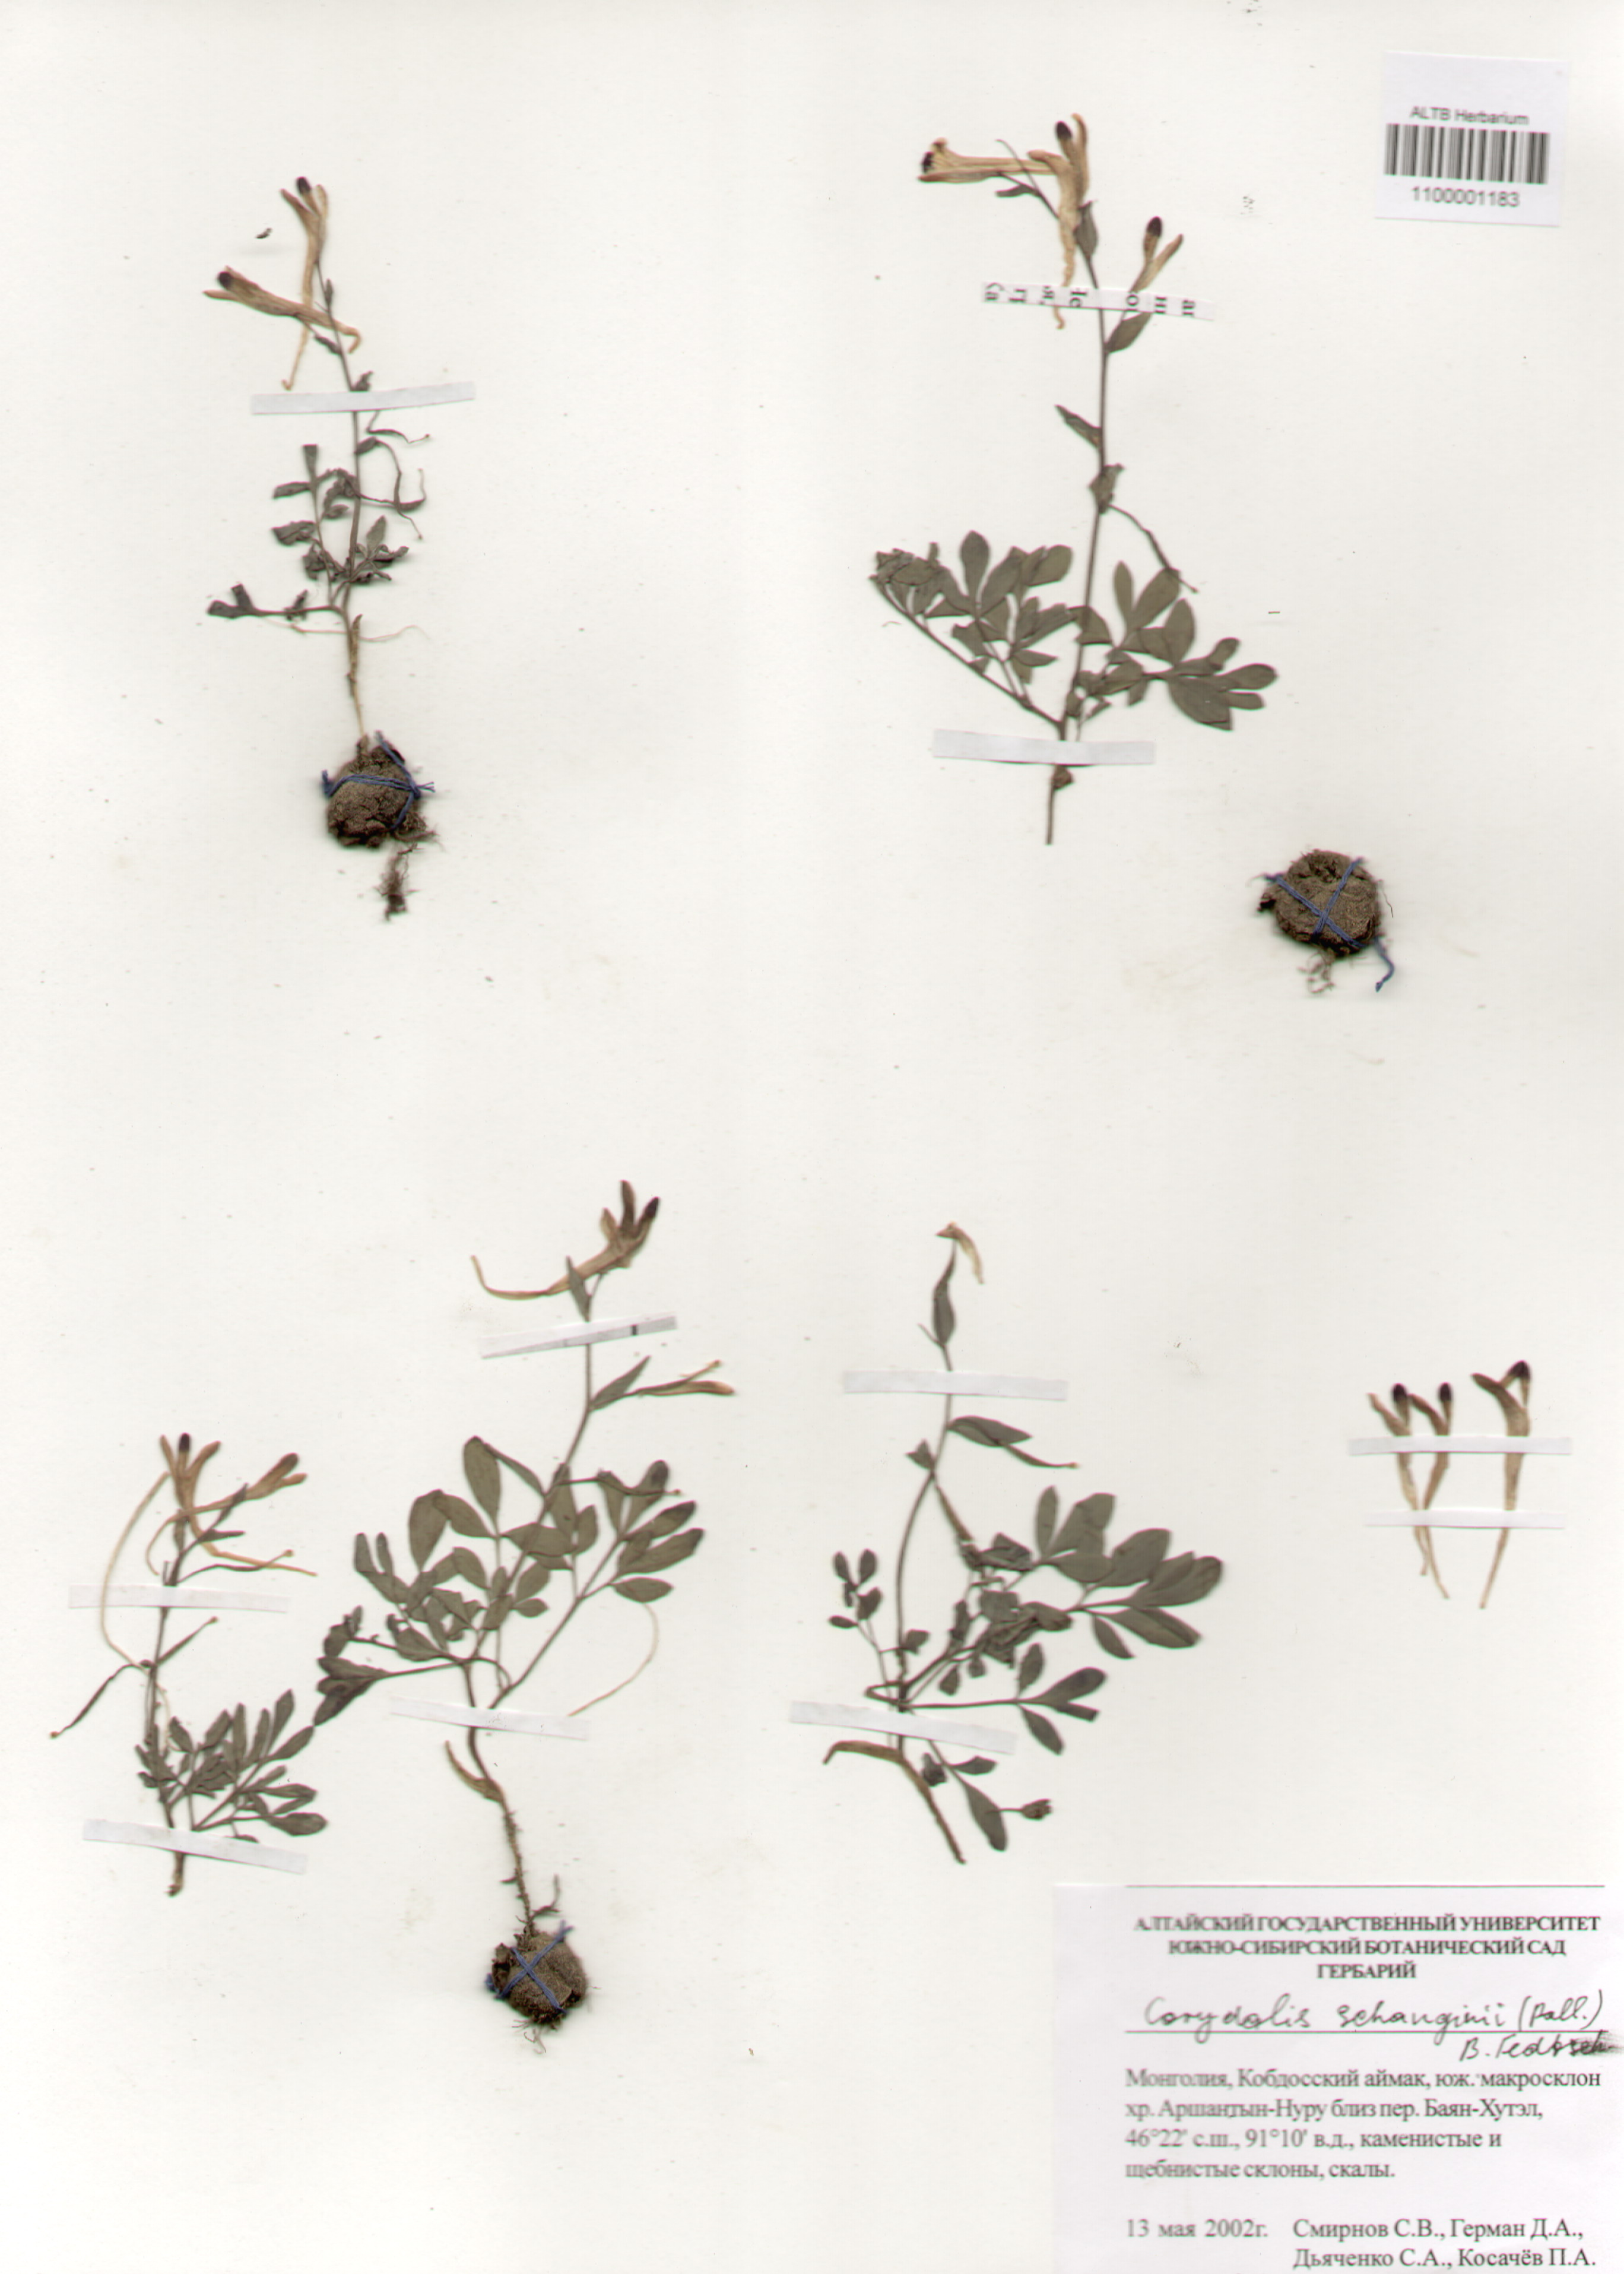 Fumariaceae,Corydalis schanginii (Pall.) B. Fedtsch.